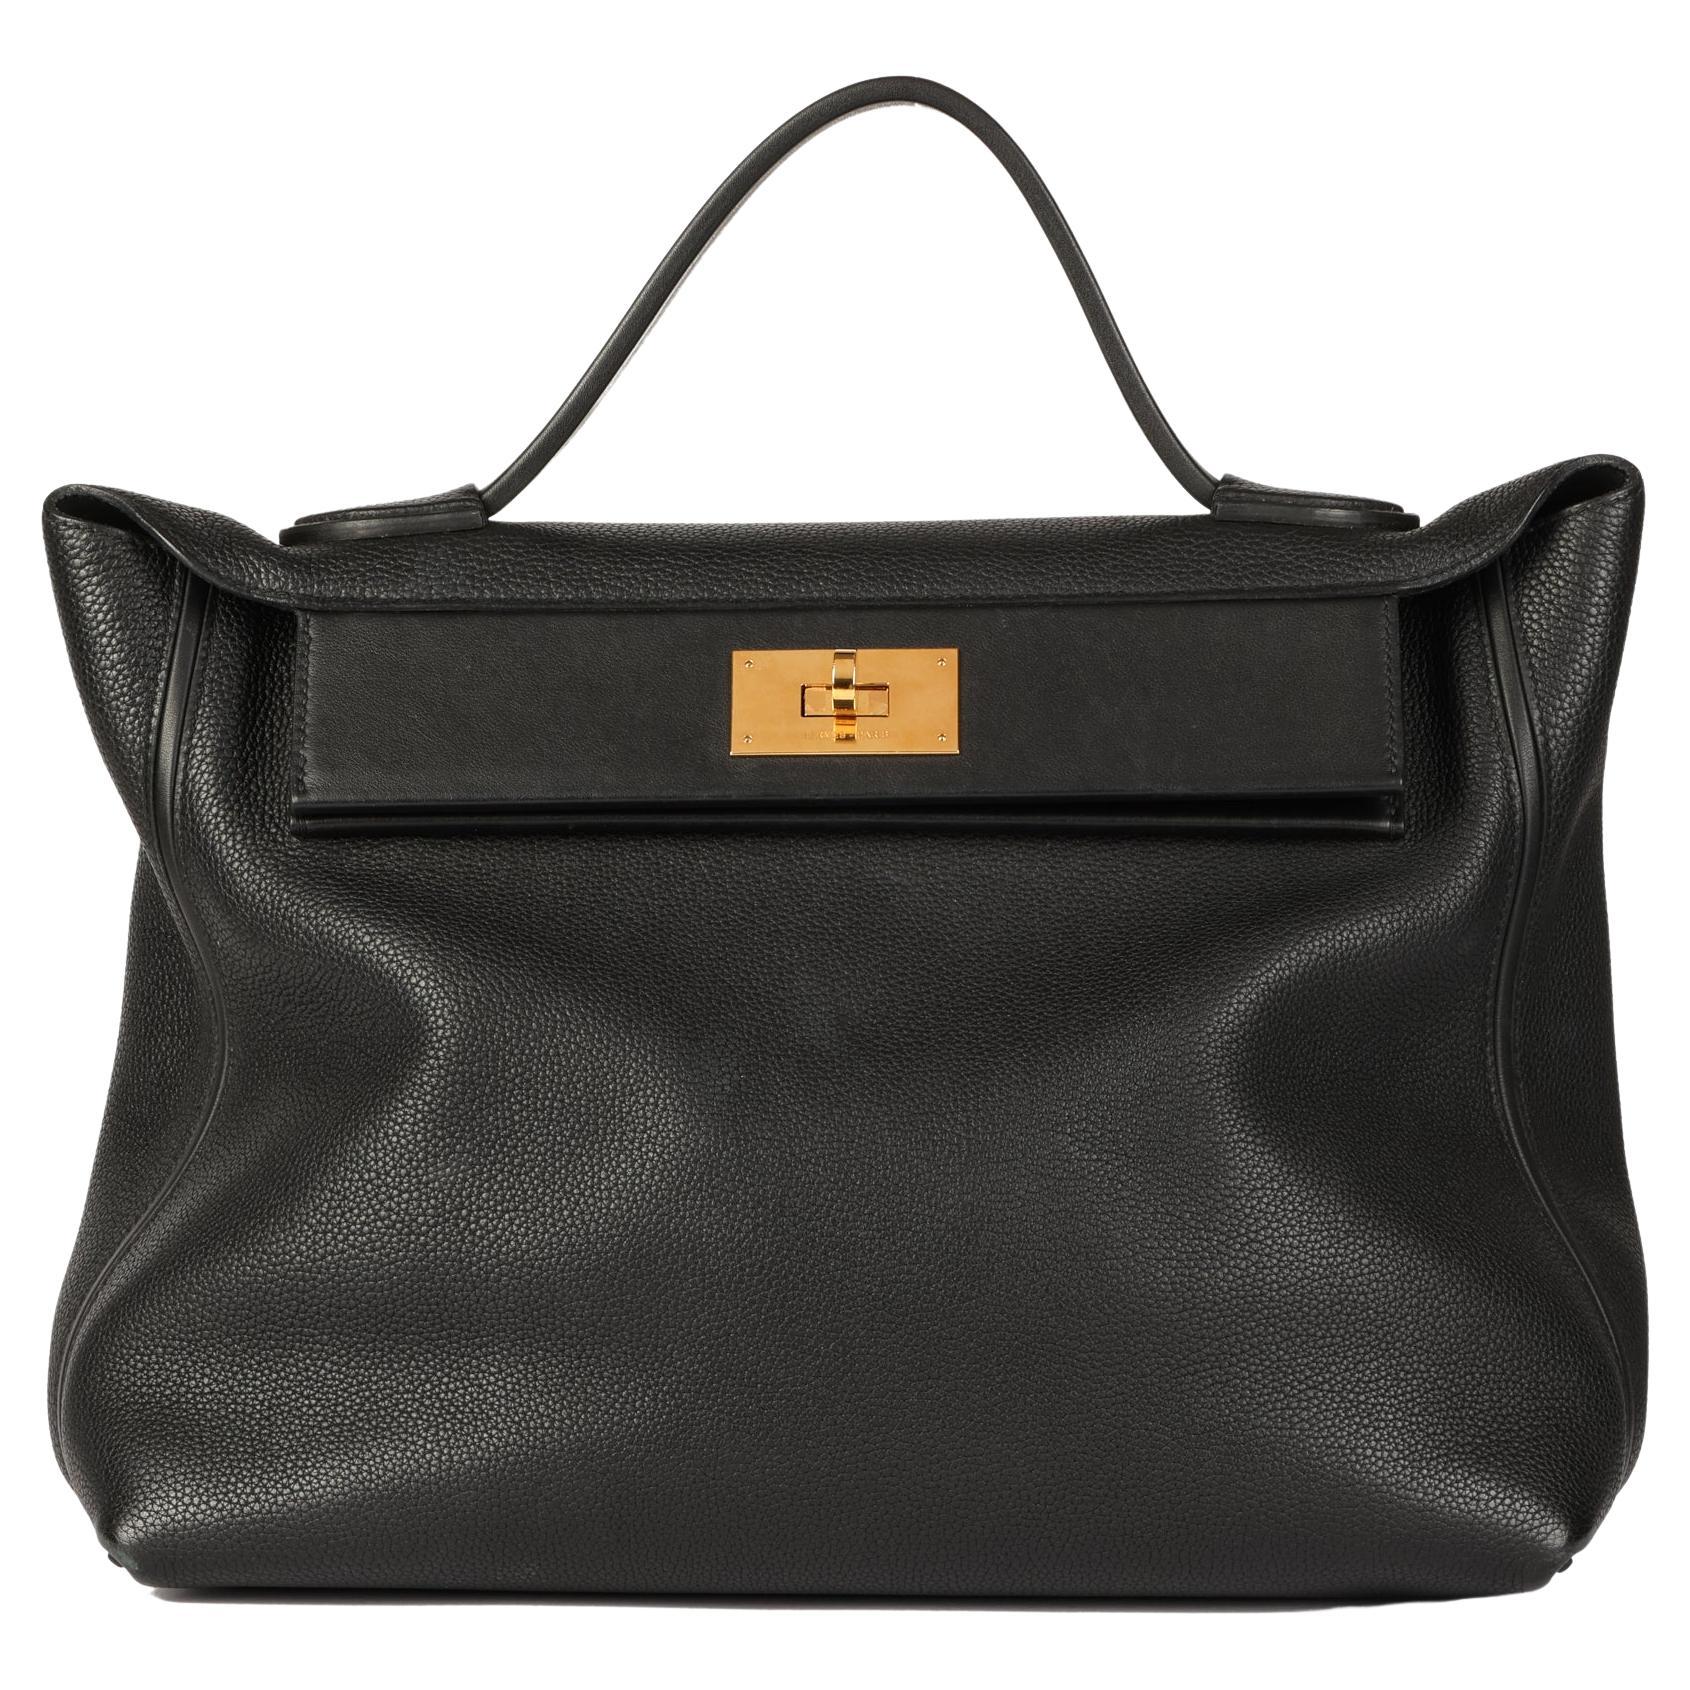 Hermès Cuir Togo noir et cuir Swift 24/24 35cm en vente